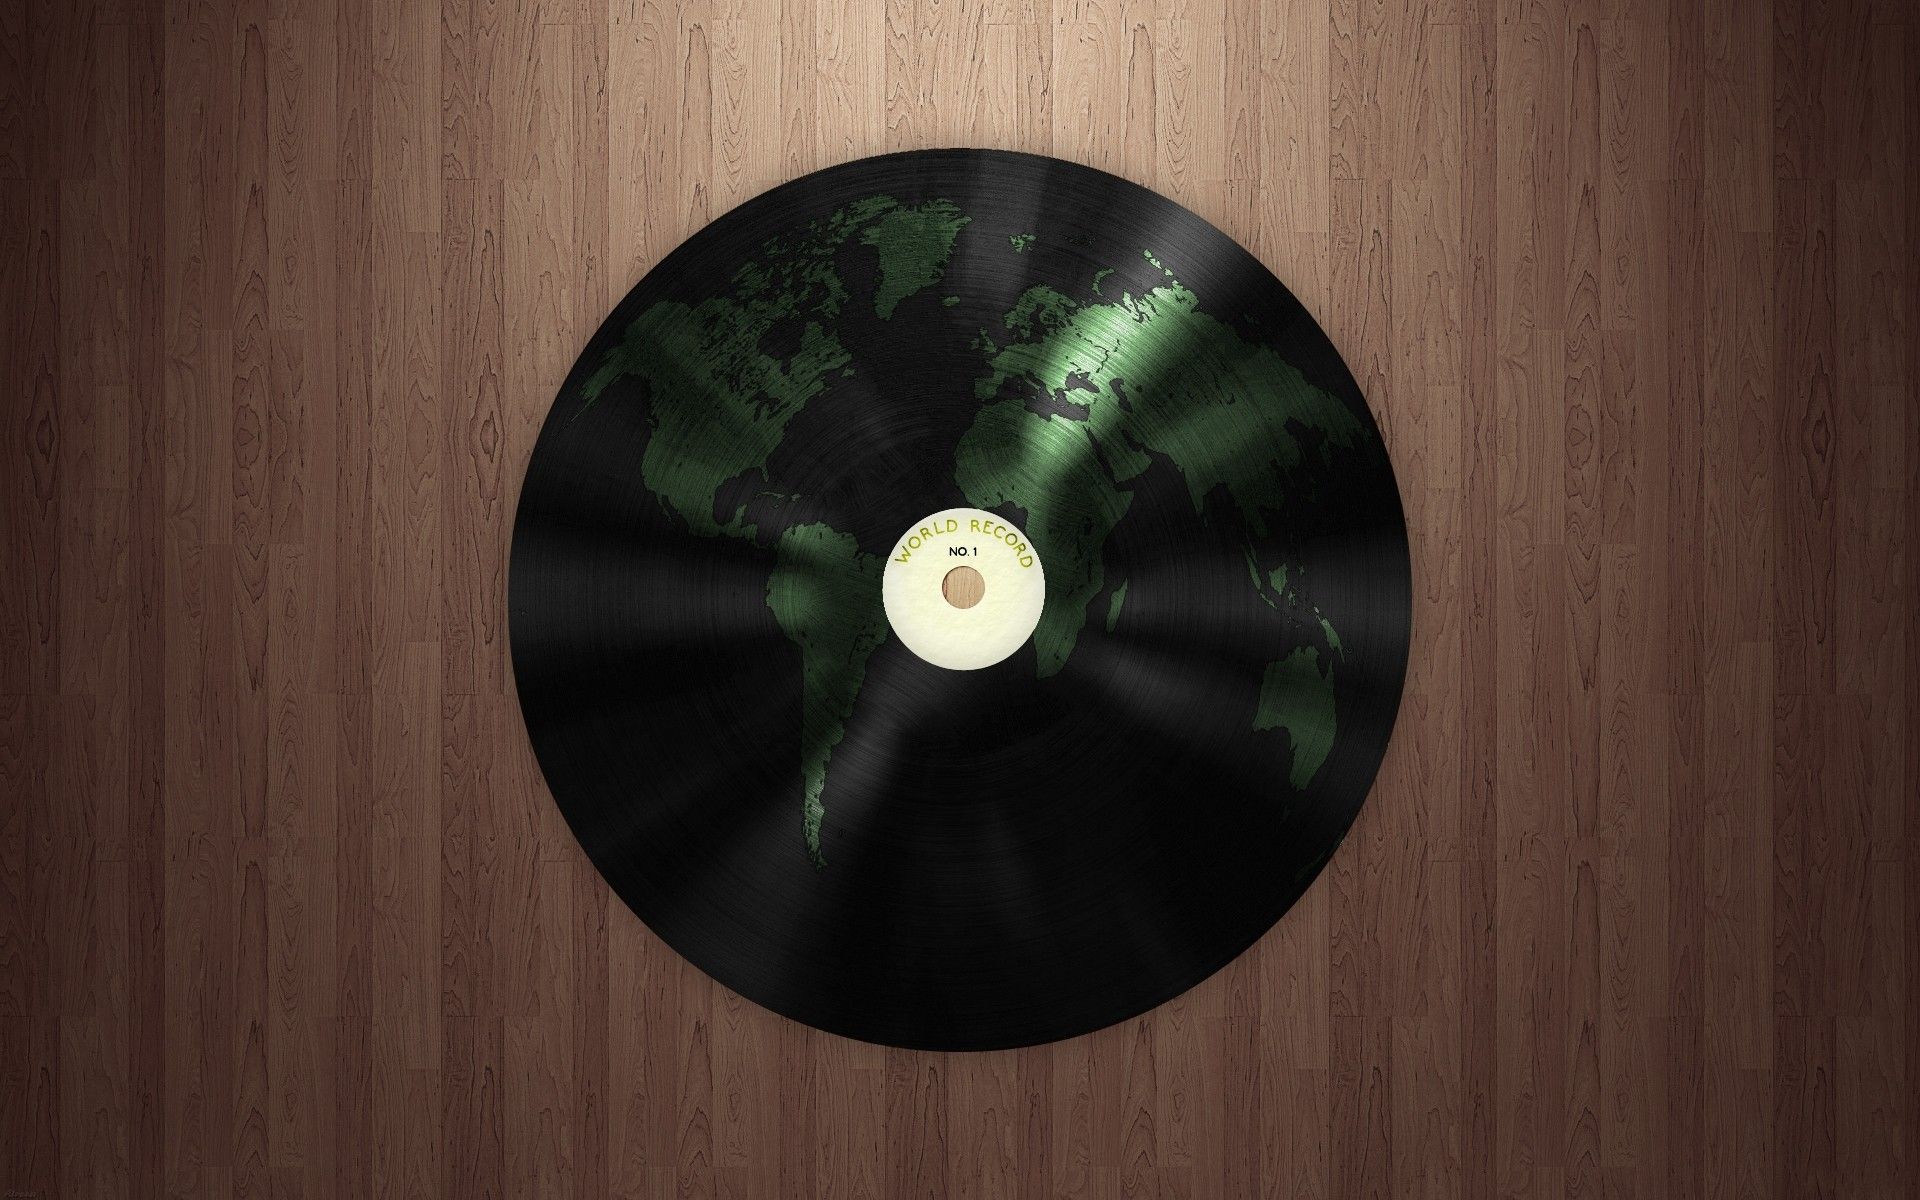 Vinyl Record Wallpapers, High Resolution Wallpaper - Vinyl Wallpaper 4k - HD Wallpaper 